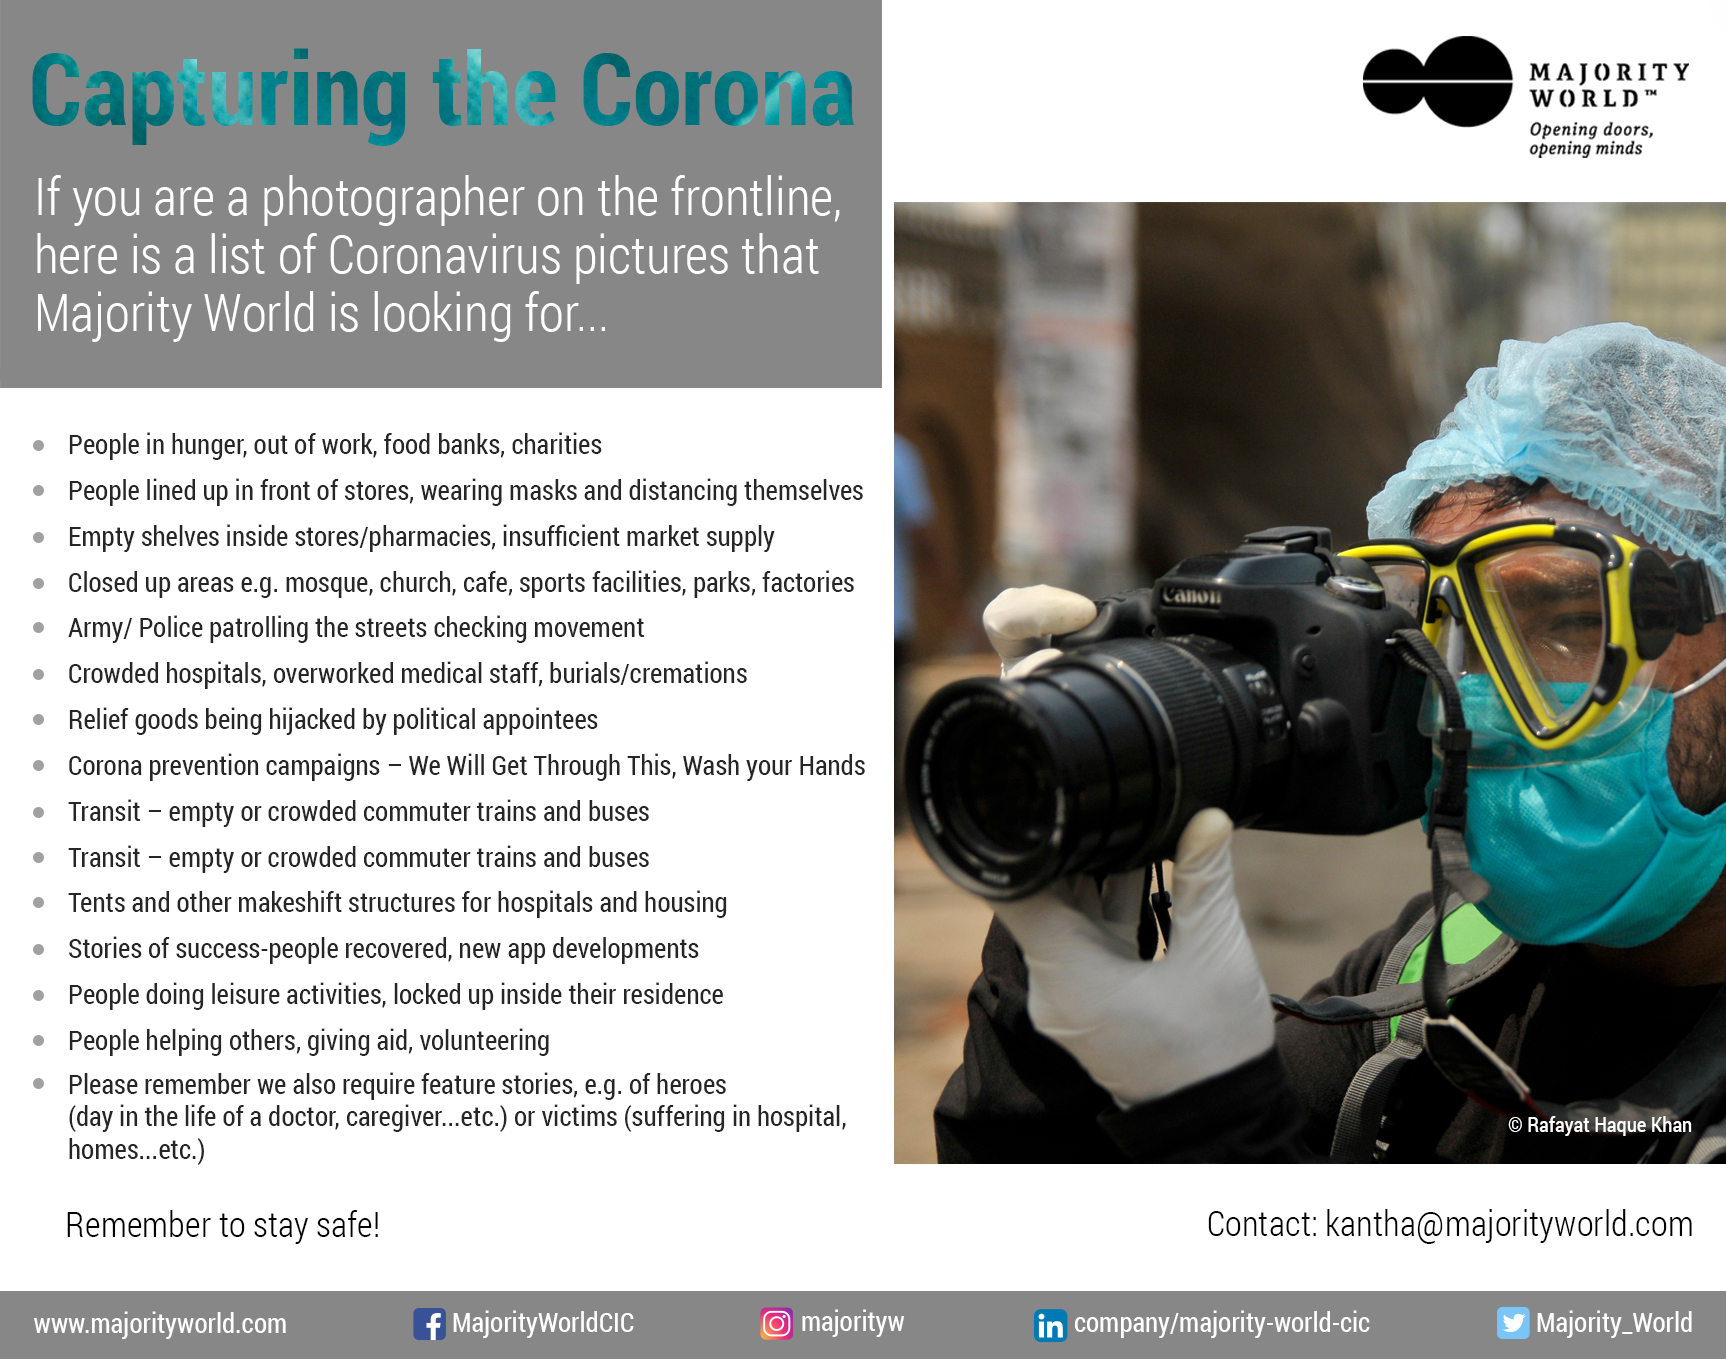 Capture the Coronavirus (COVID-19)